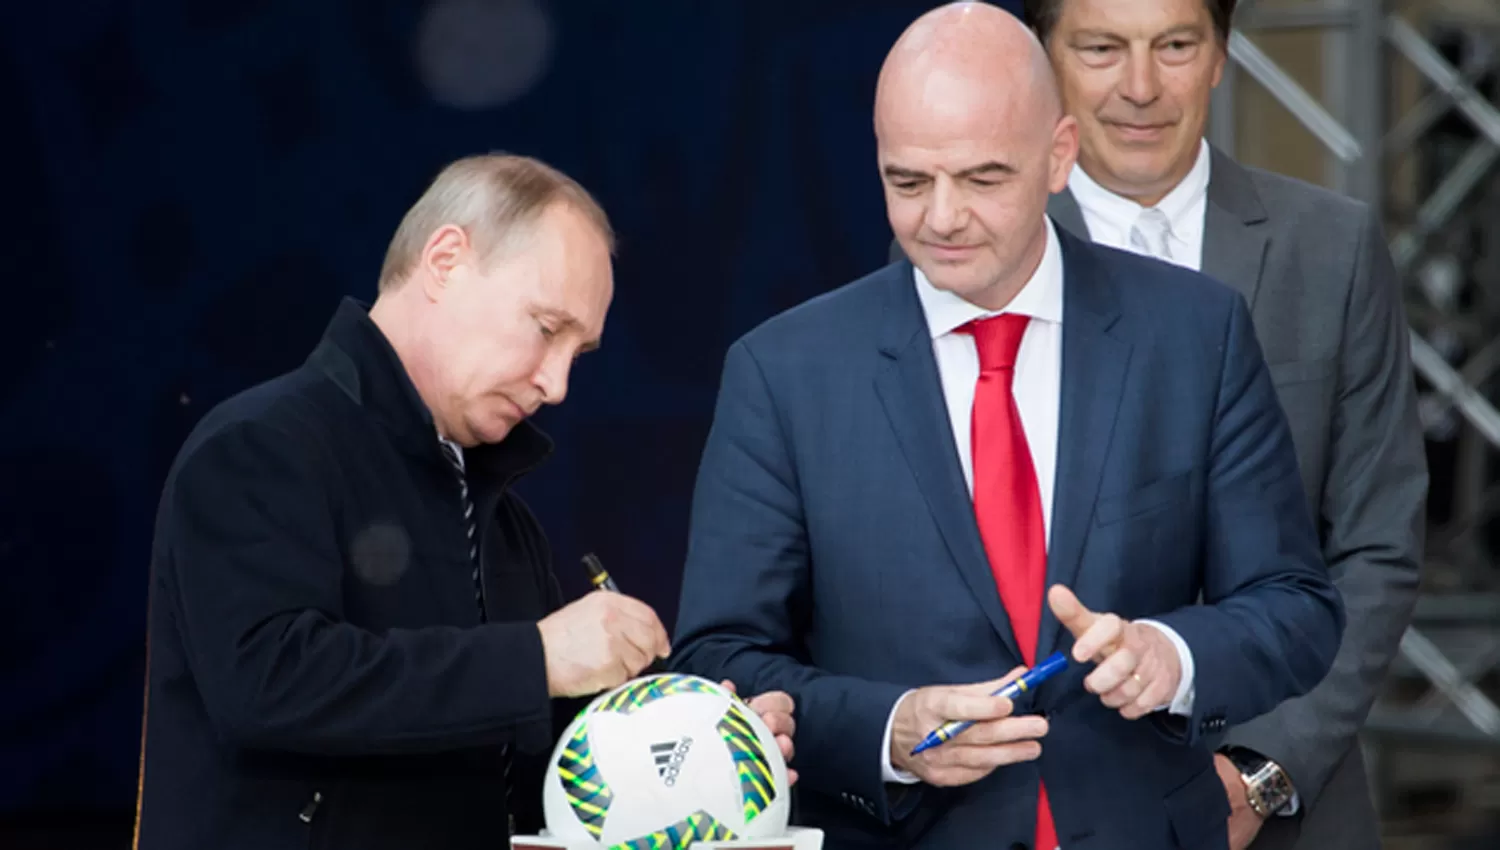 FIGURAS. Putin e Infantino firman la pelota del mundial. (DAILY MAIL)